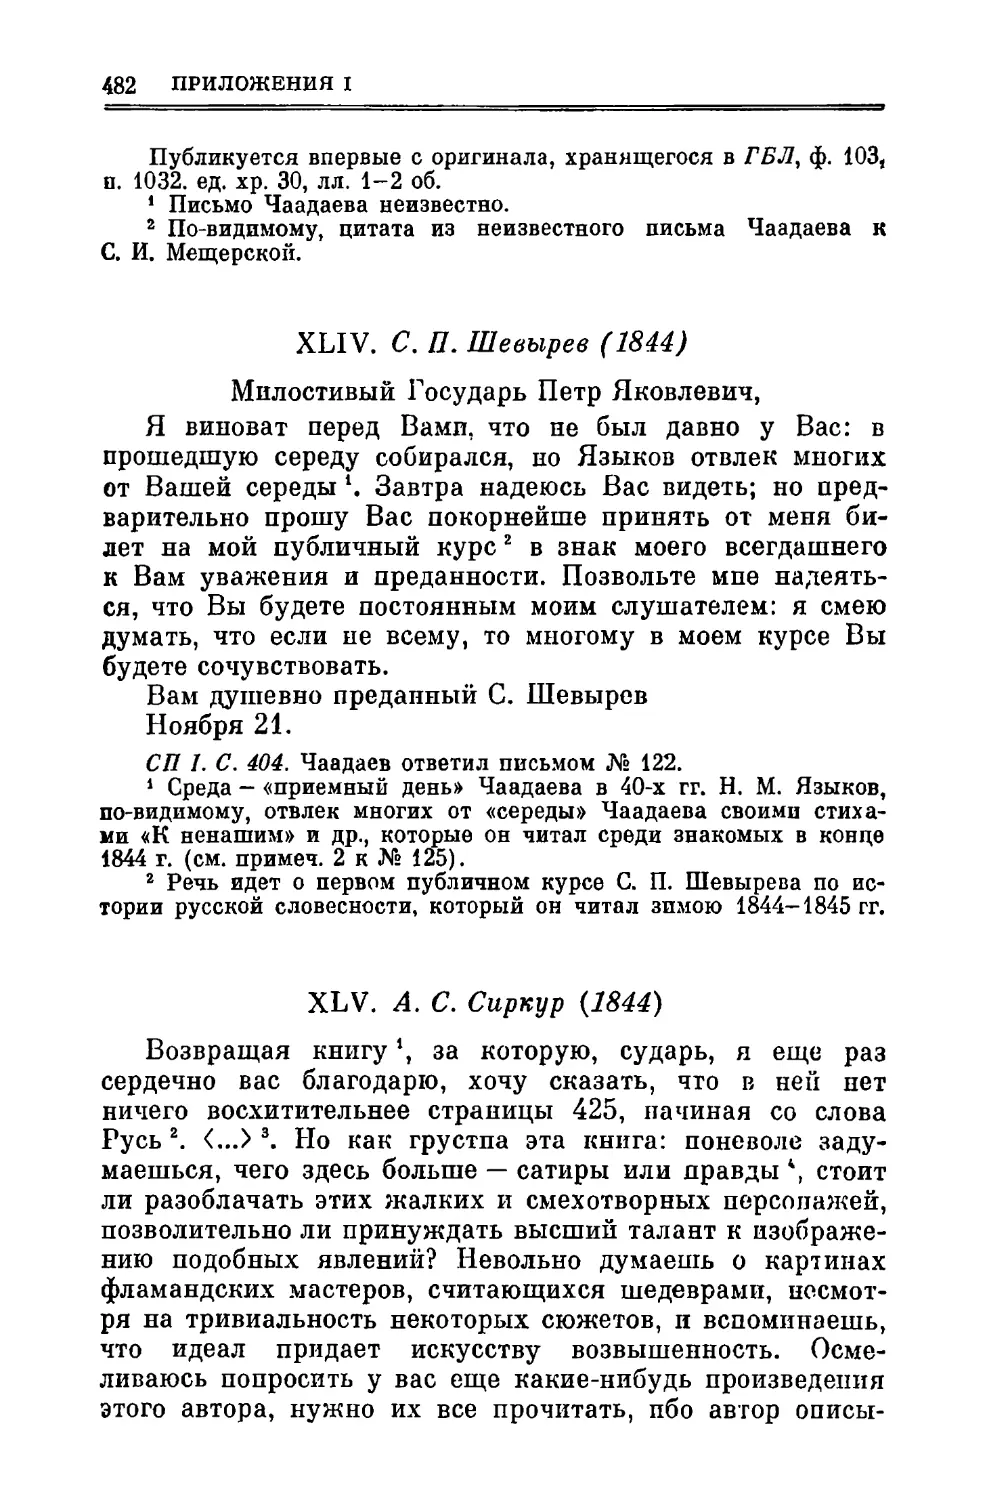 XLIV. Шевырев С.П. 21.XI.1844
XLV. Сиркур A.C. 1844